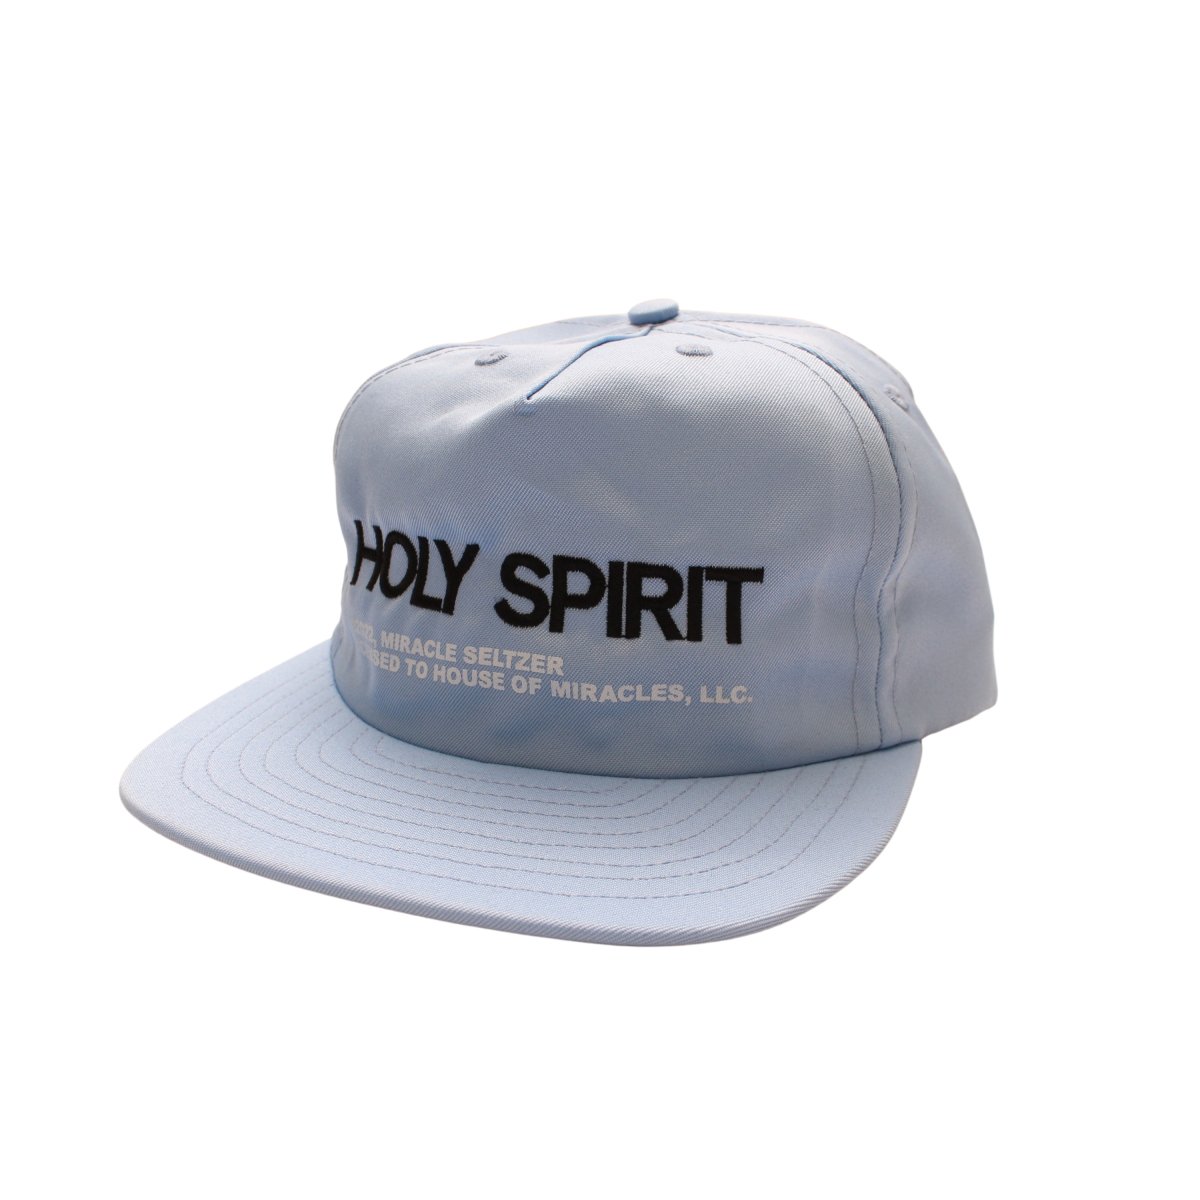 HOLY SPIRIT HAT 